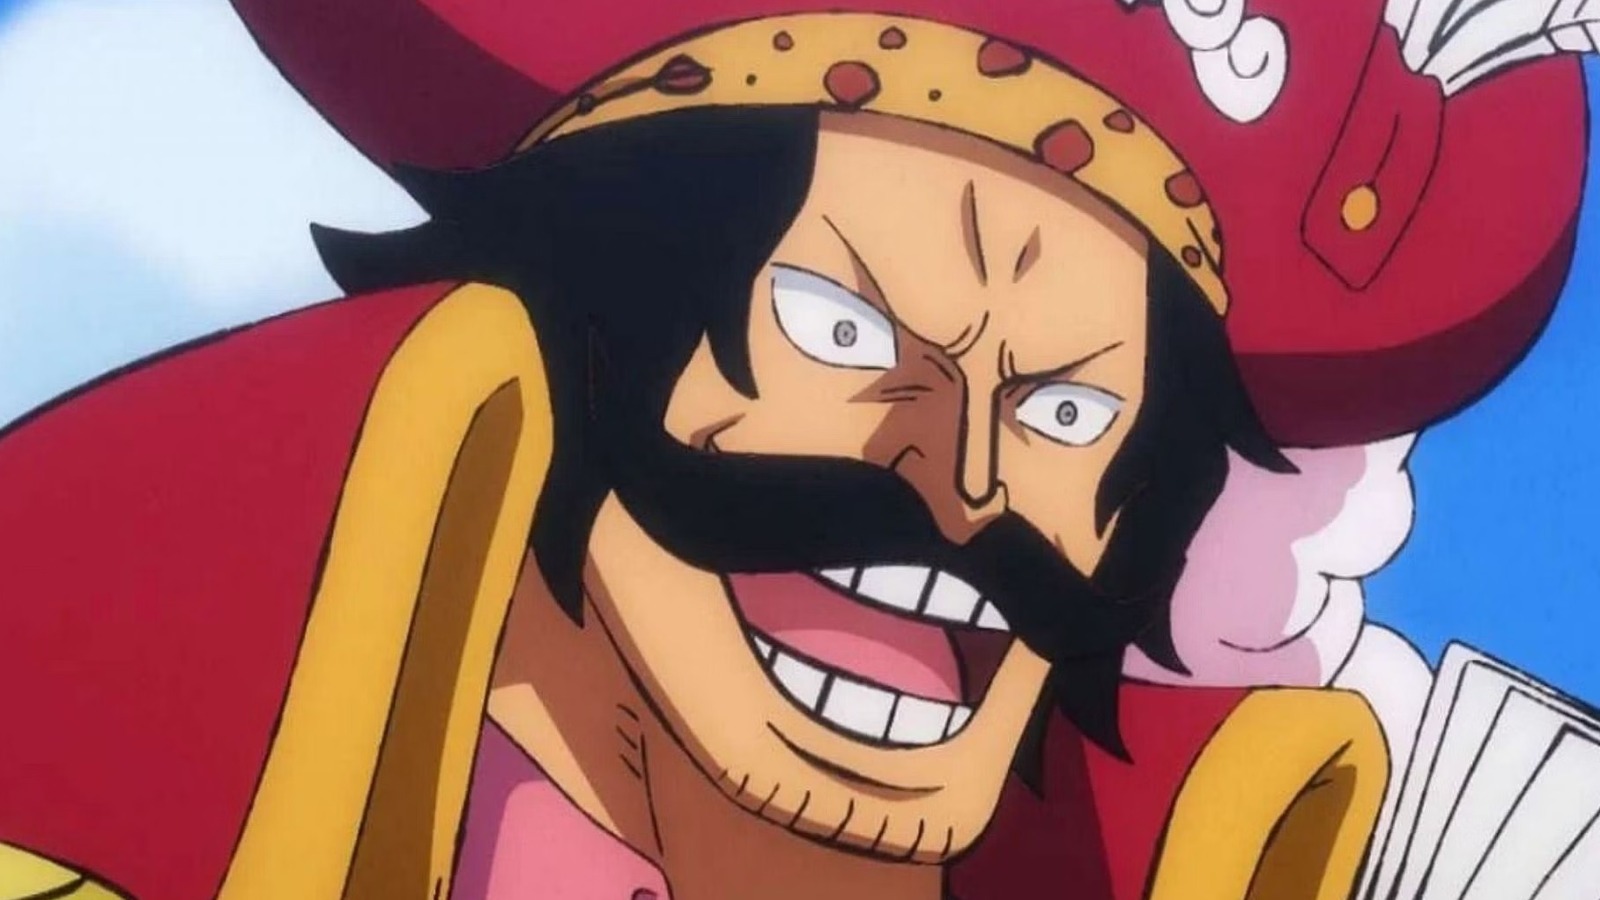 Dragon Ball', 'One Piece' Voice Actor Tetsuo Goto Passes Away